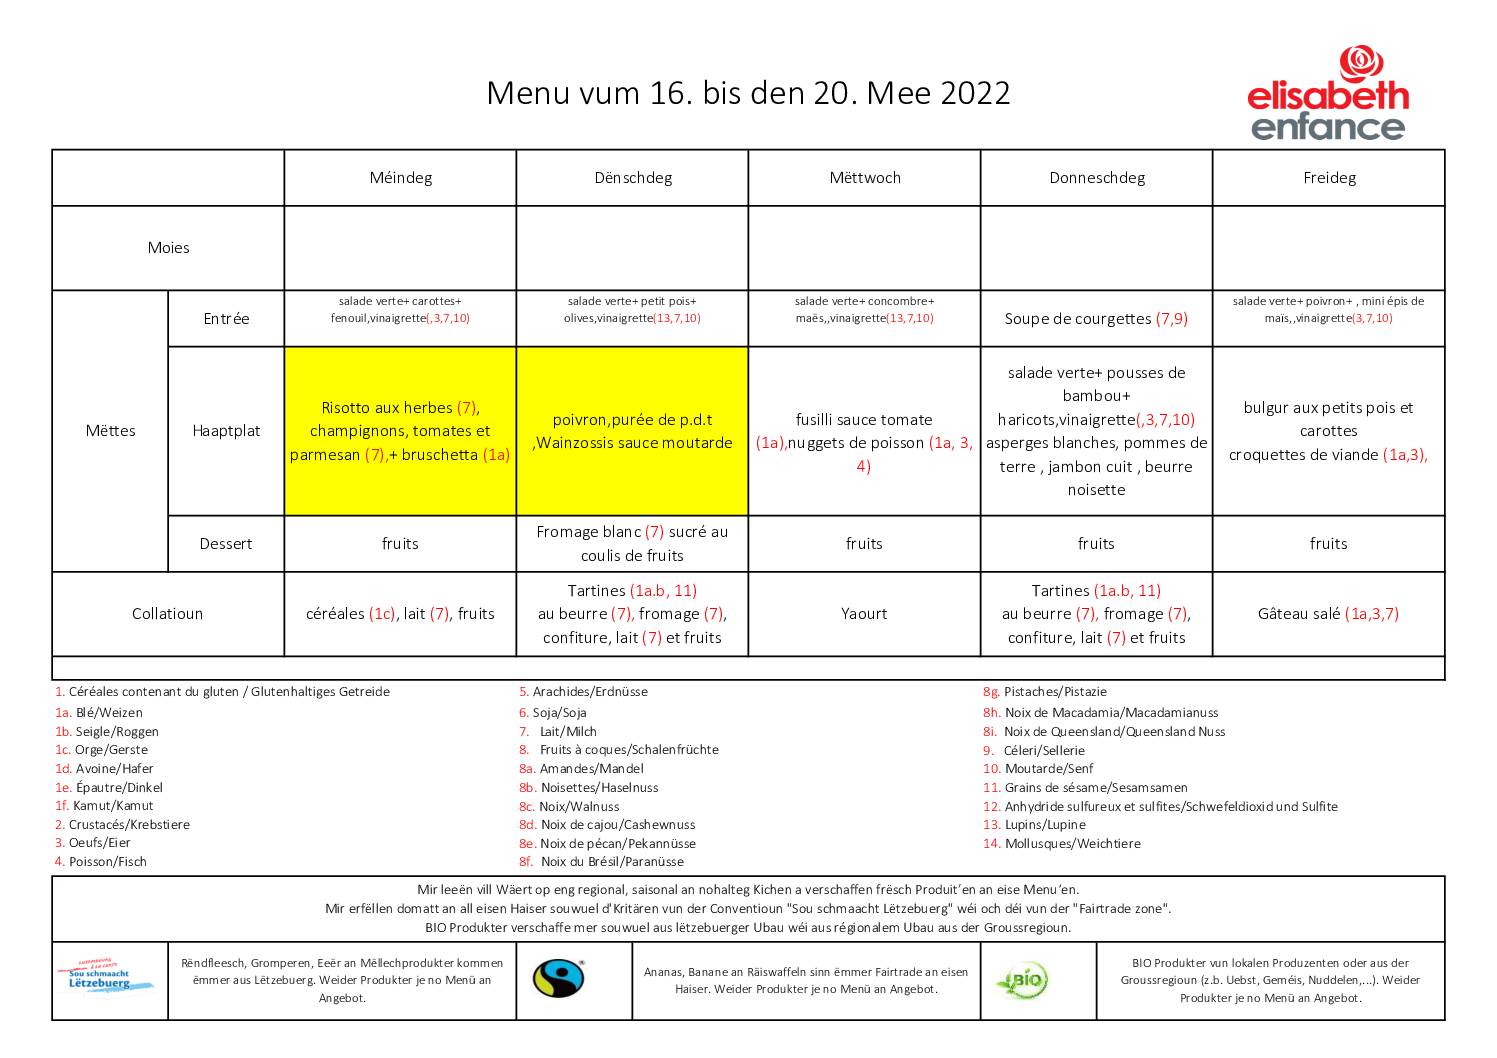 Menus de la semaine du 16 mai 2022 au 20 mai 2022